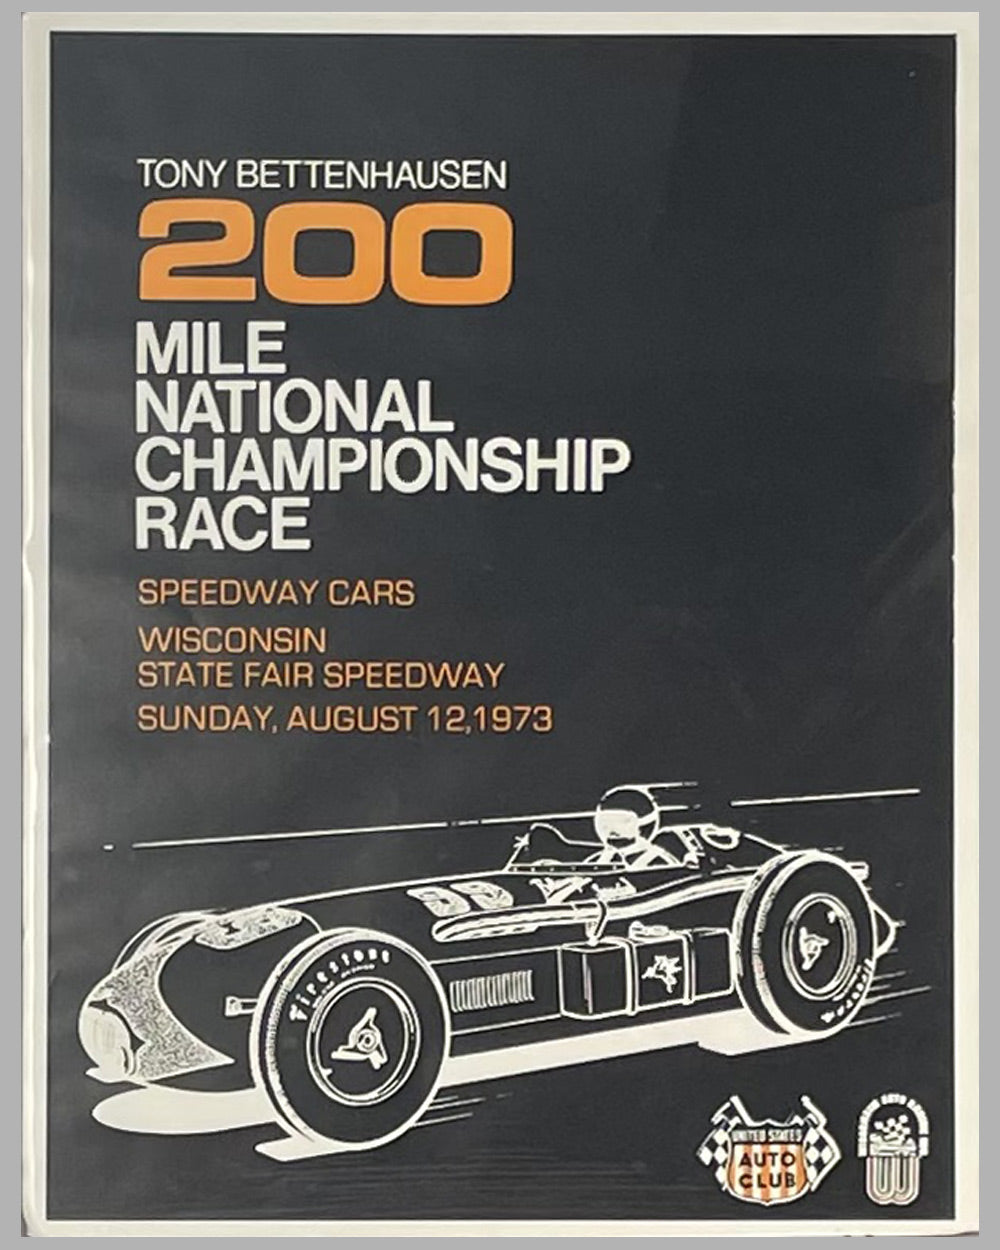 Tony Bettenhausen 200 Mile National Championship original race poster